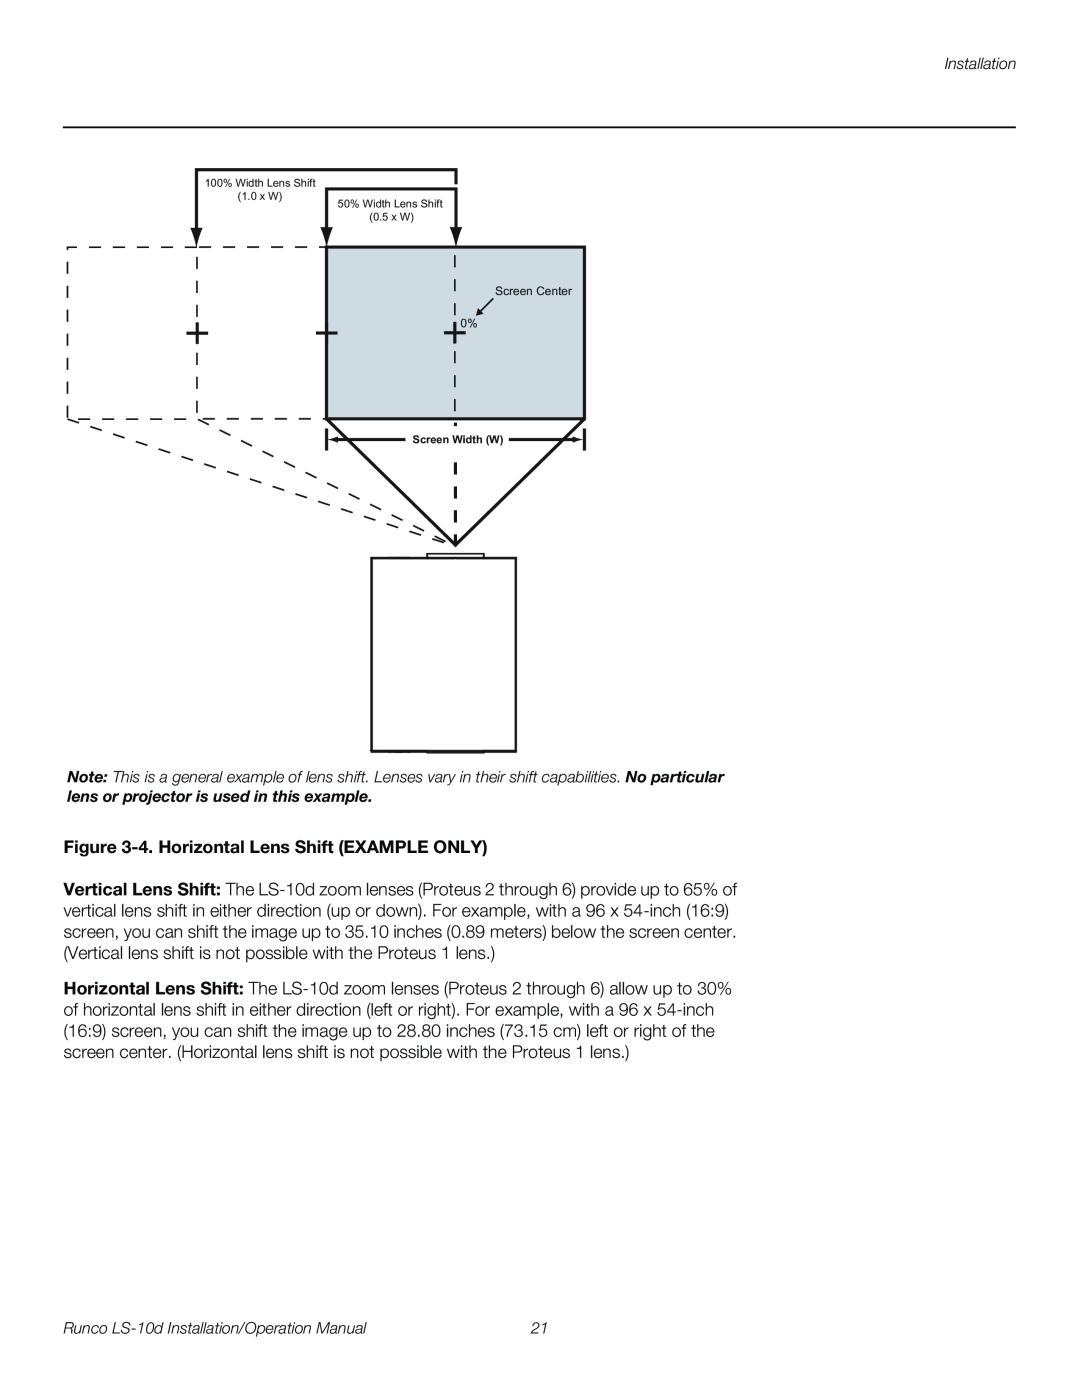 Runco LS-10D operation manual 4. Horizontal Lens Shift EXAMPLE ONLY, Screen Center 0% 